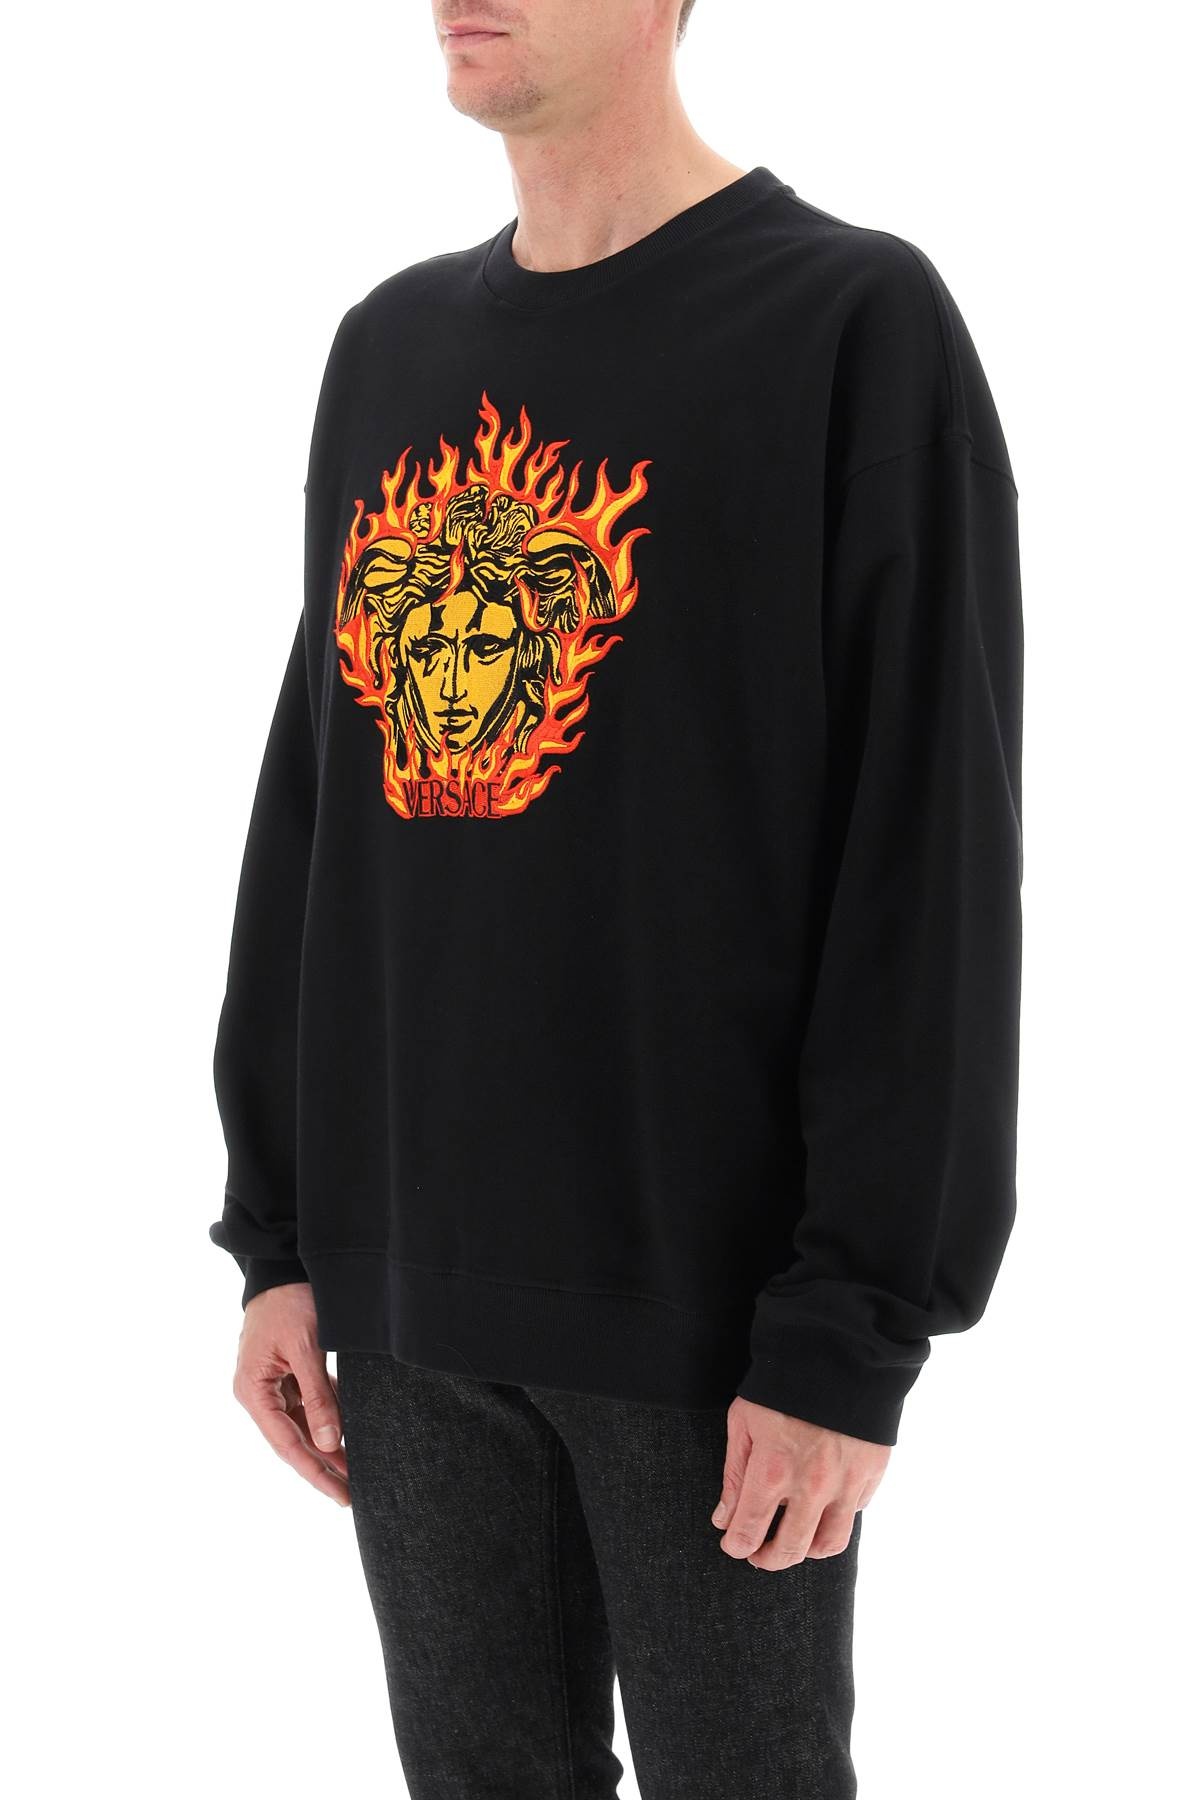 Medusa Flame Sweatshirt - 2